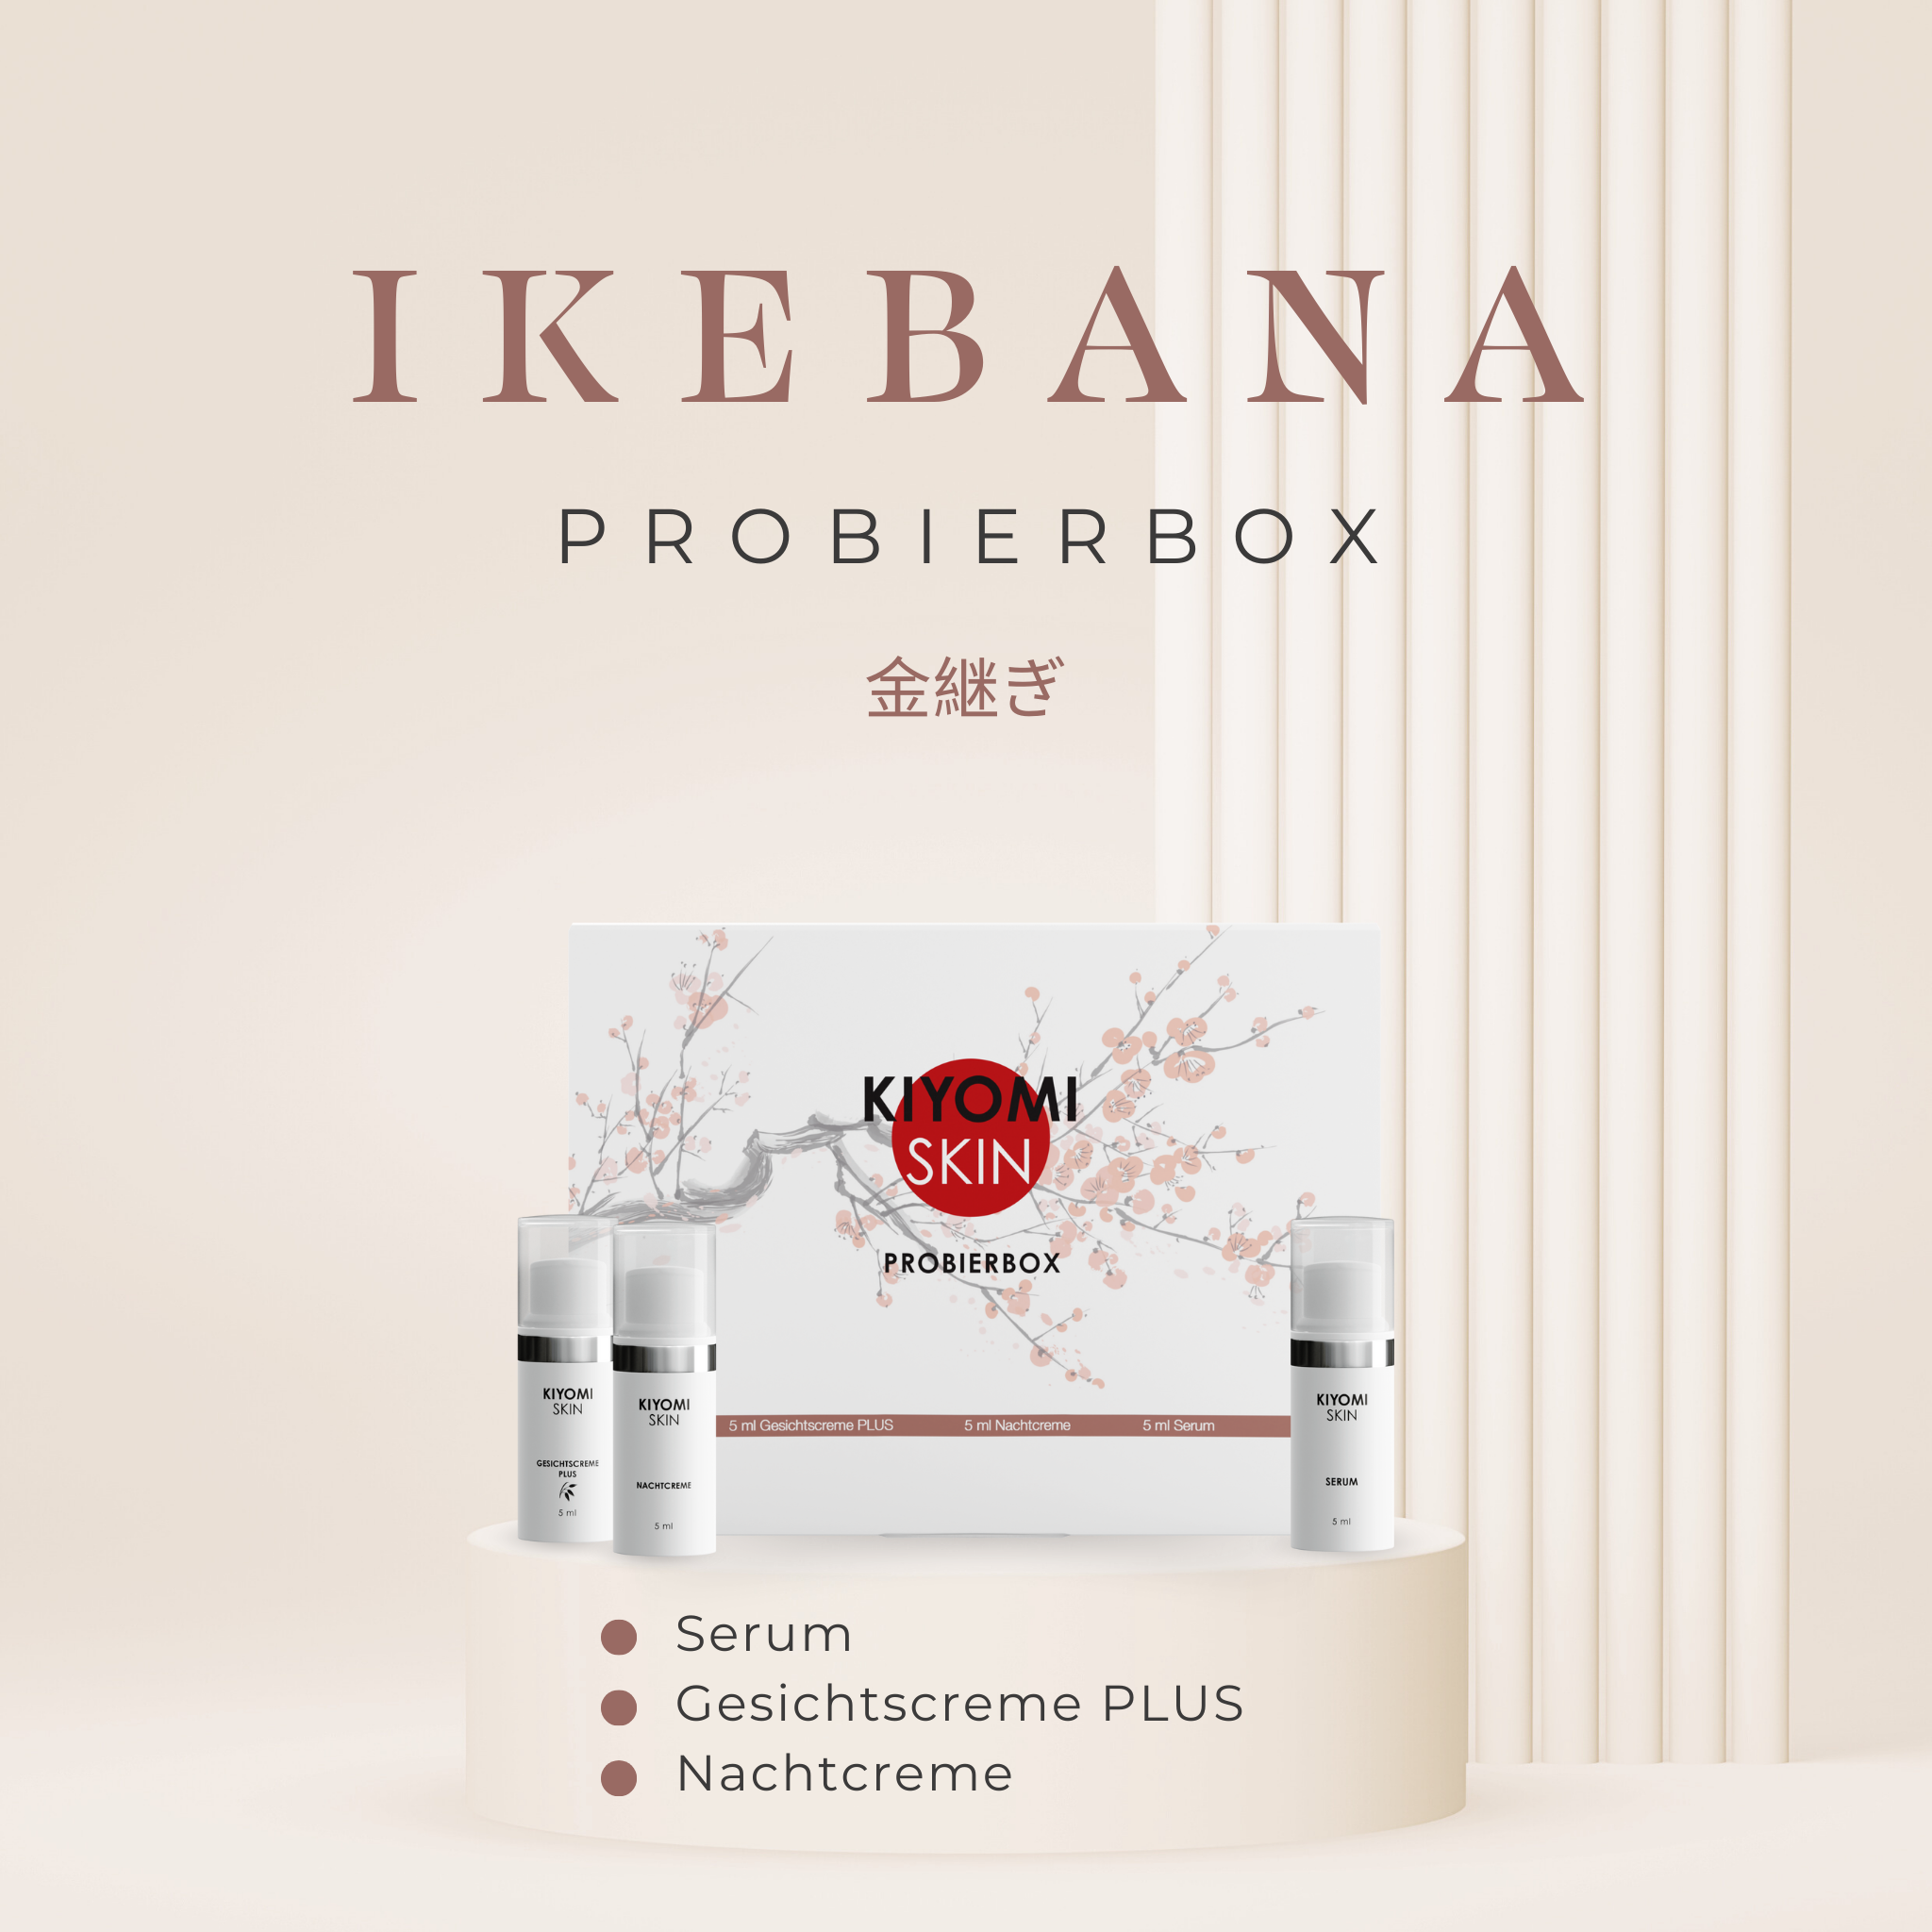 Probierbox Ikebana